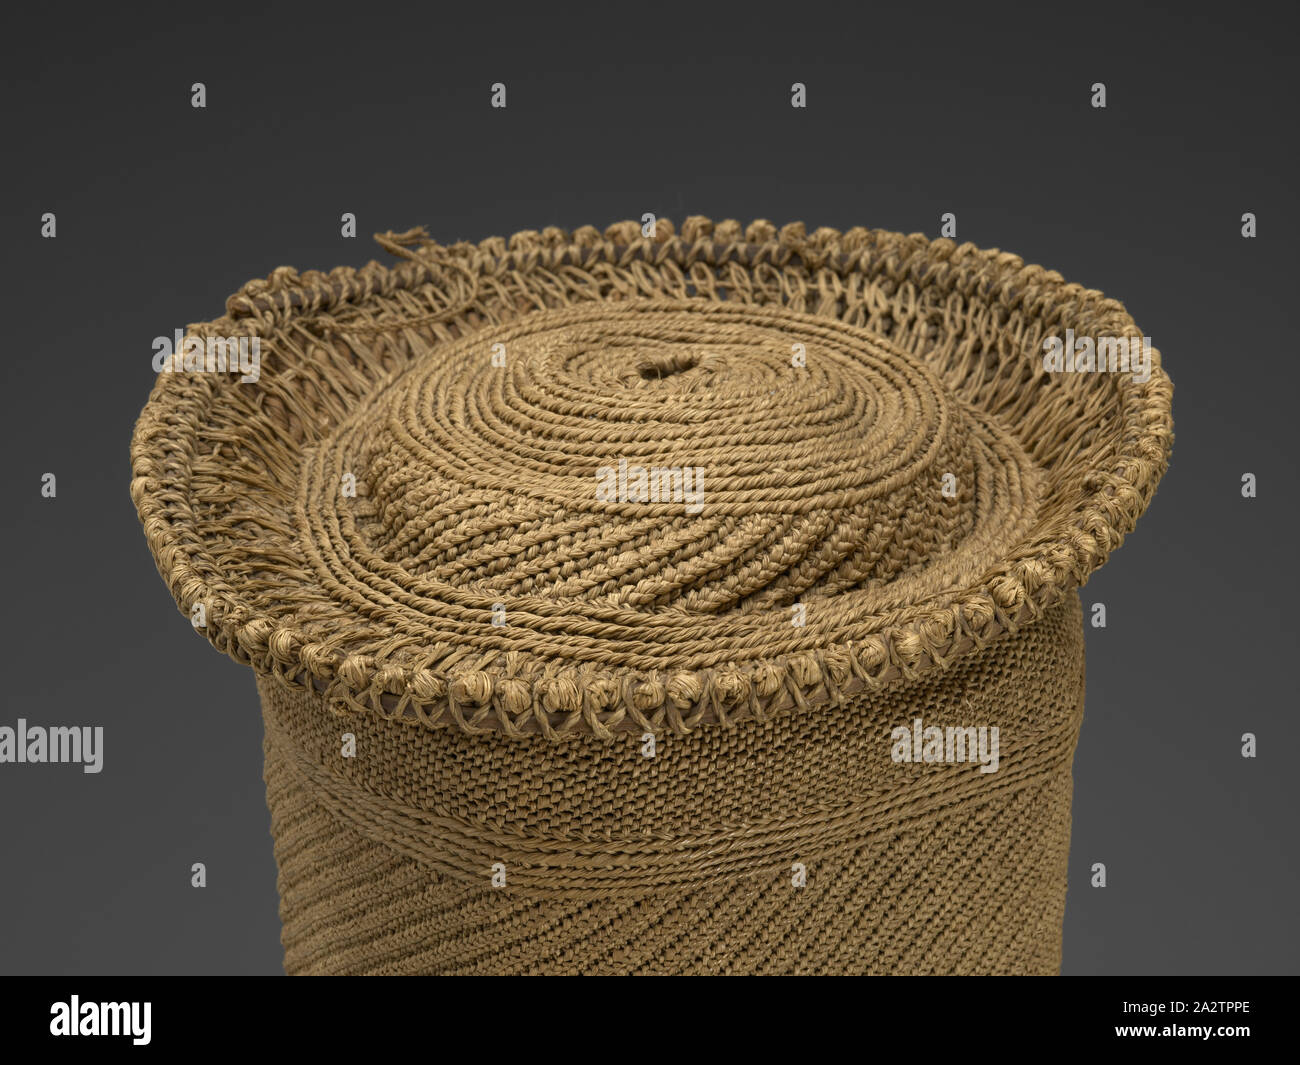 chief's hat; (botolo), Mongo, 1880-1900, fiber (twined raffia), bark, 8 x 7 x 7 in., Textile and Fashion Arts Stock Photo